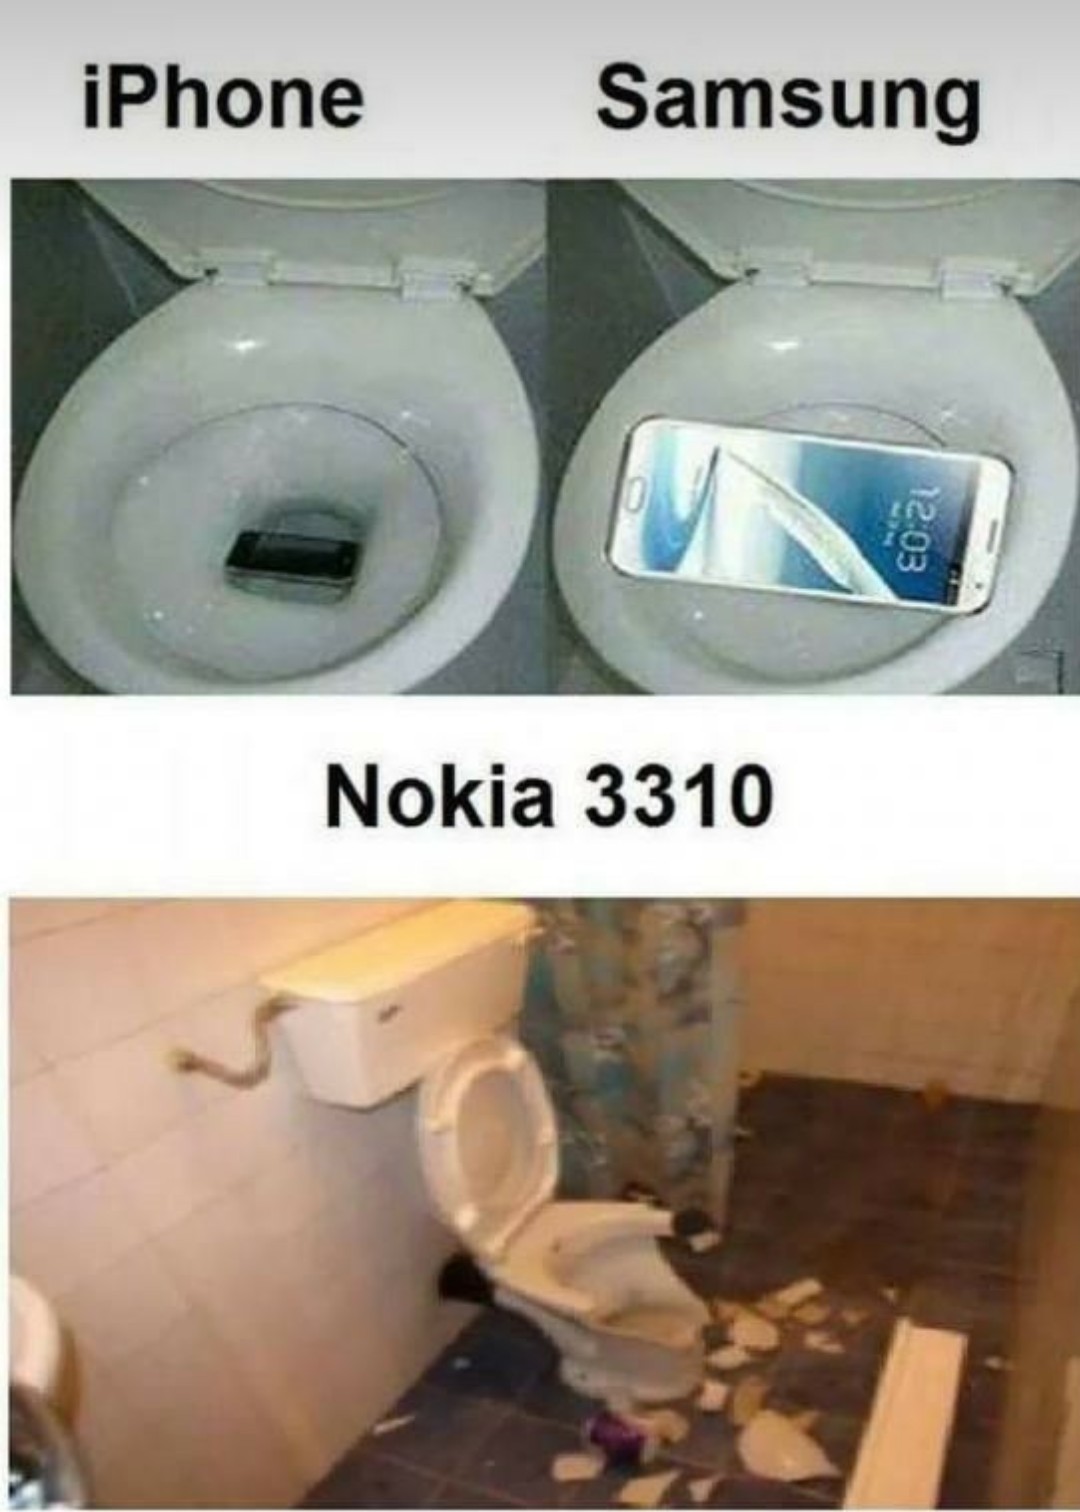 Saudades Nokia ;-; - meme